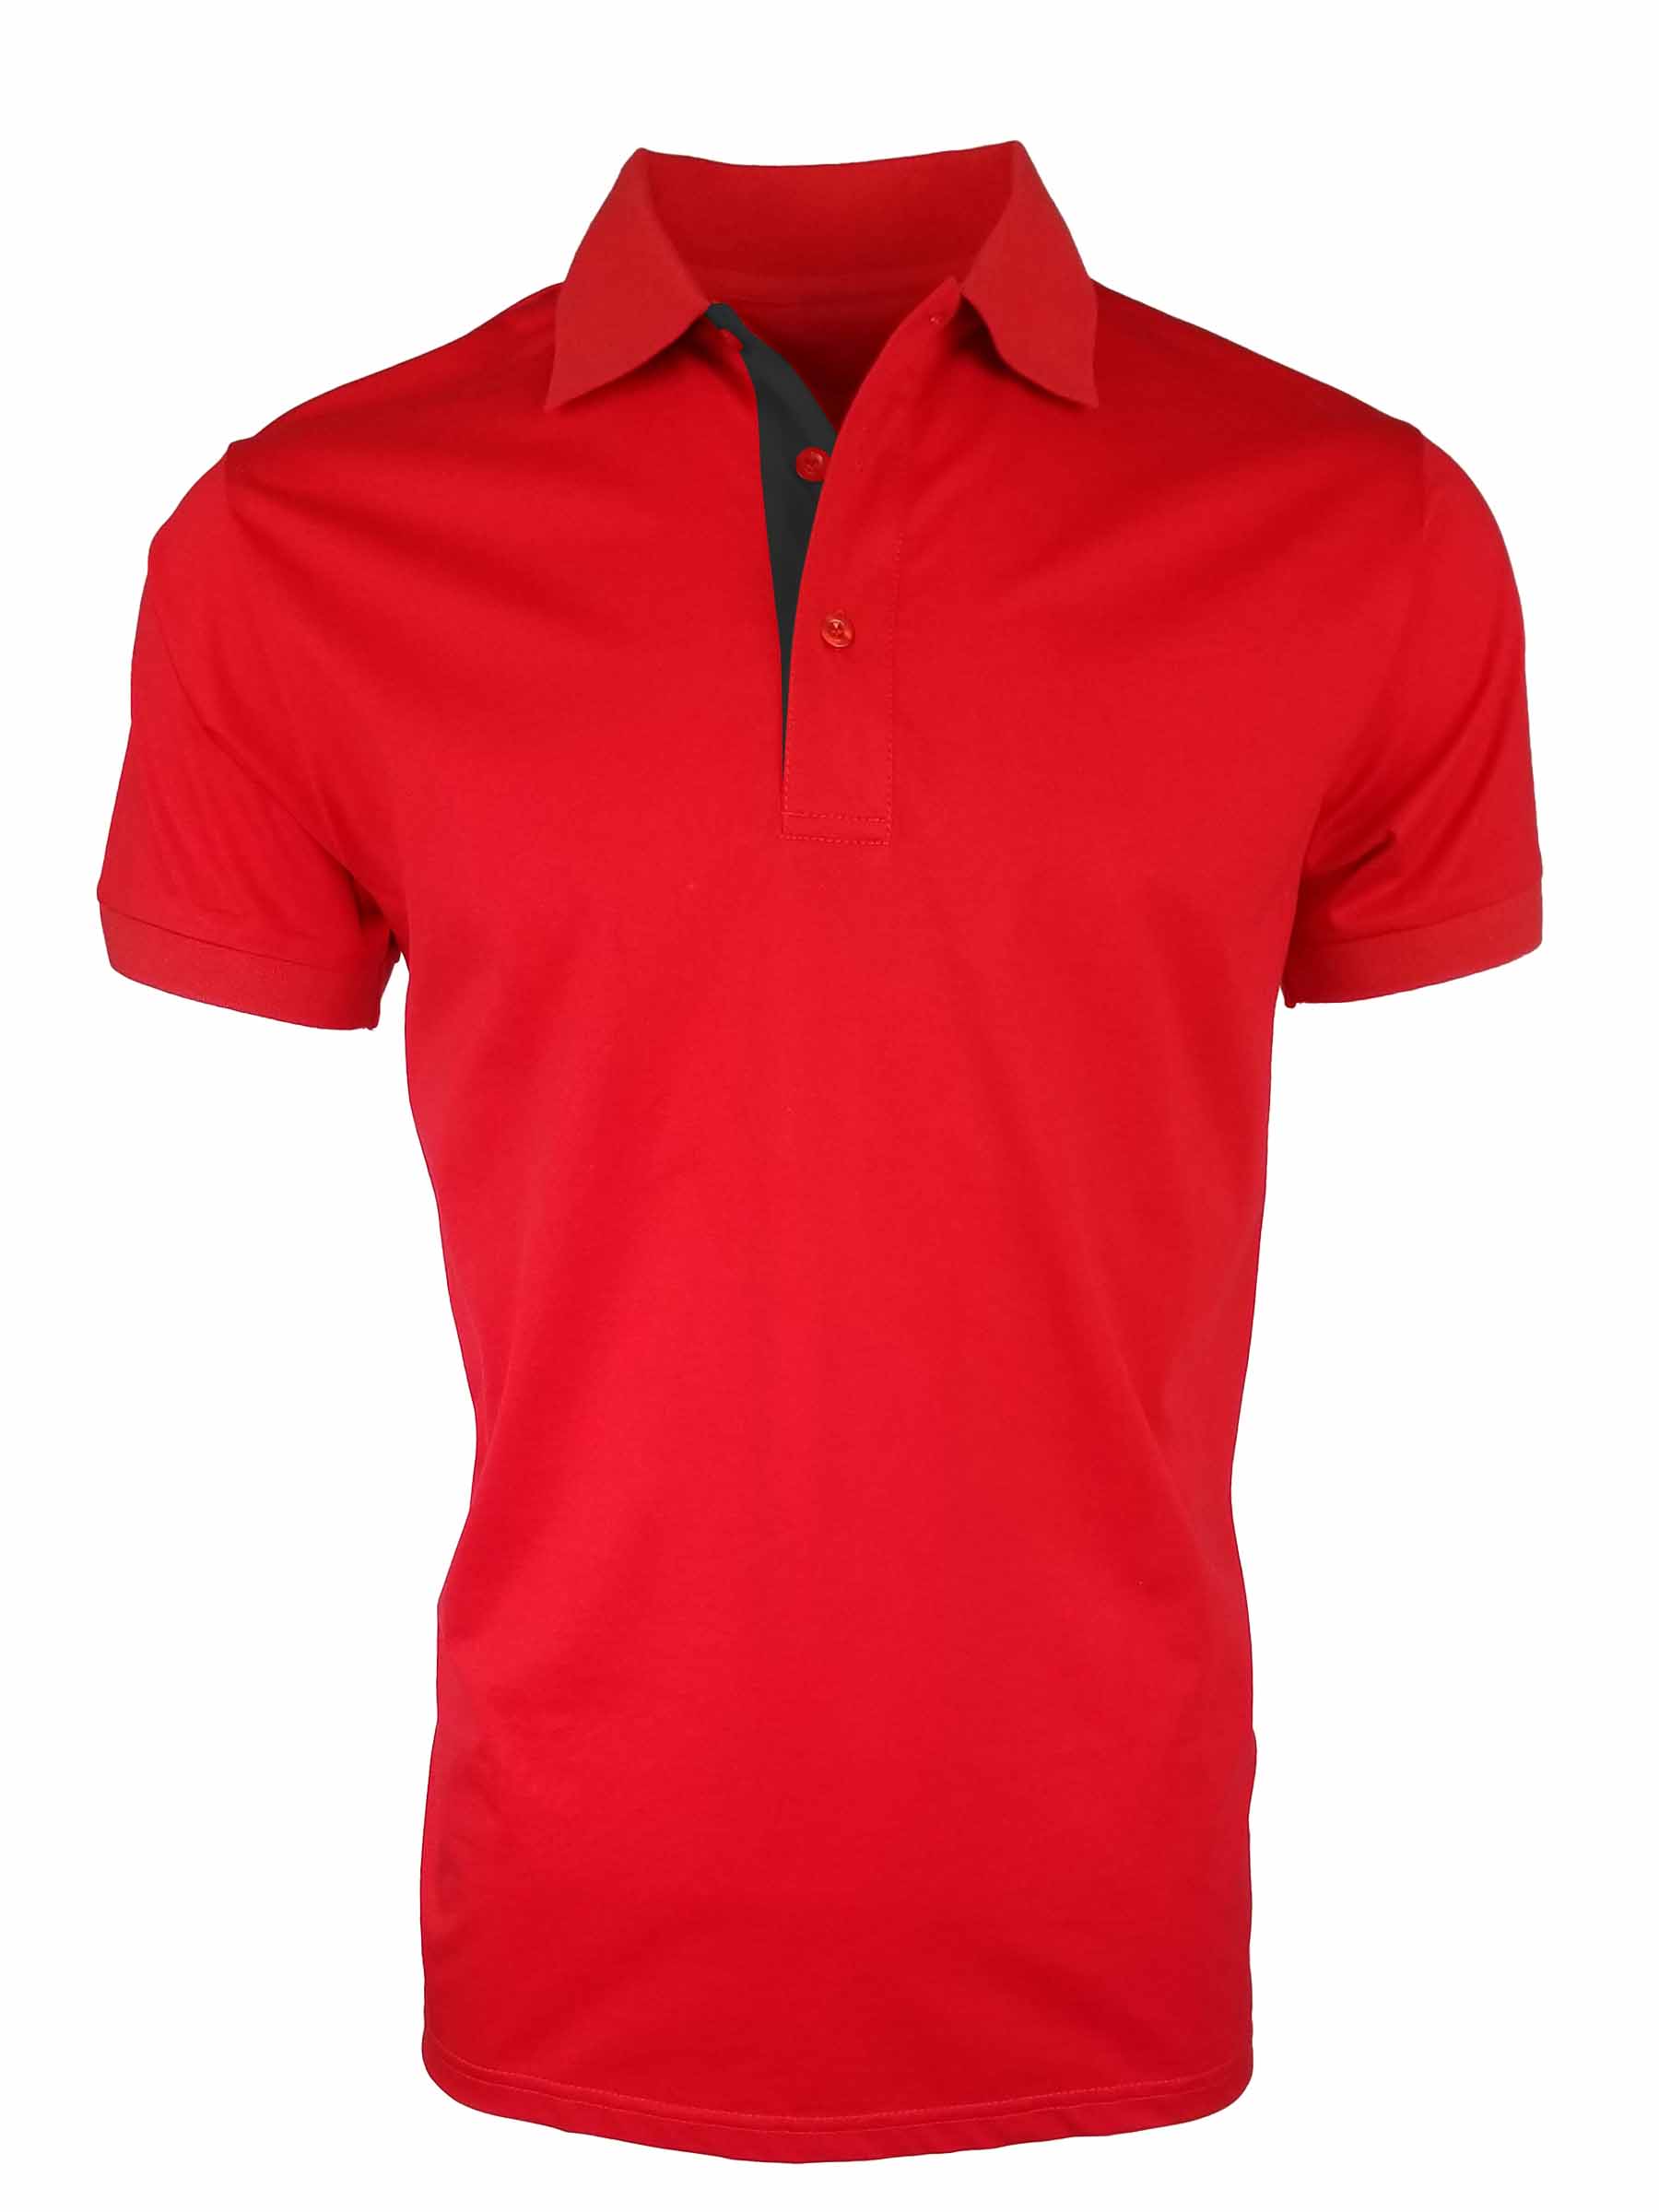 Men's Contrast Mercerized Polo - Red - Uniform Edit